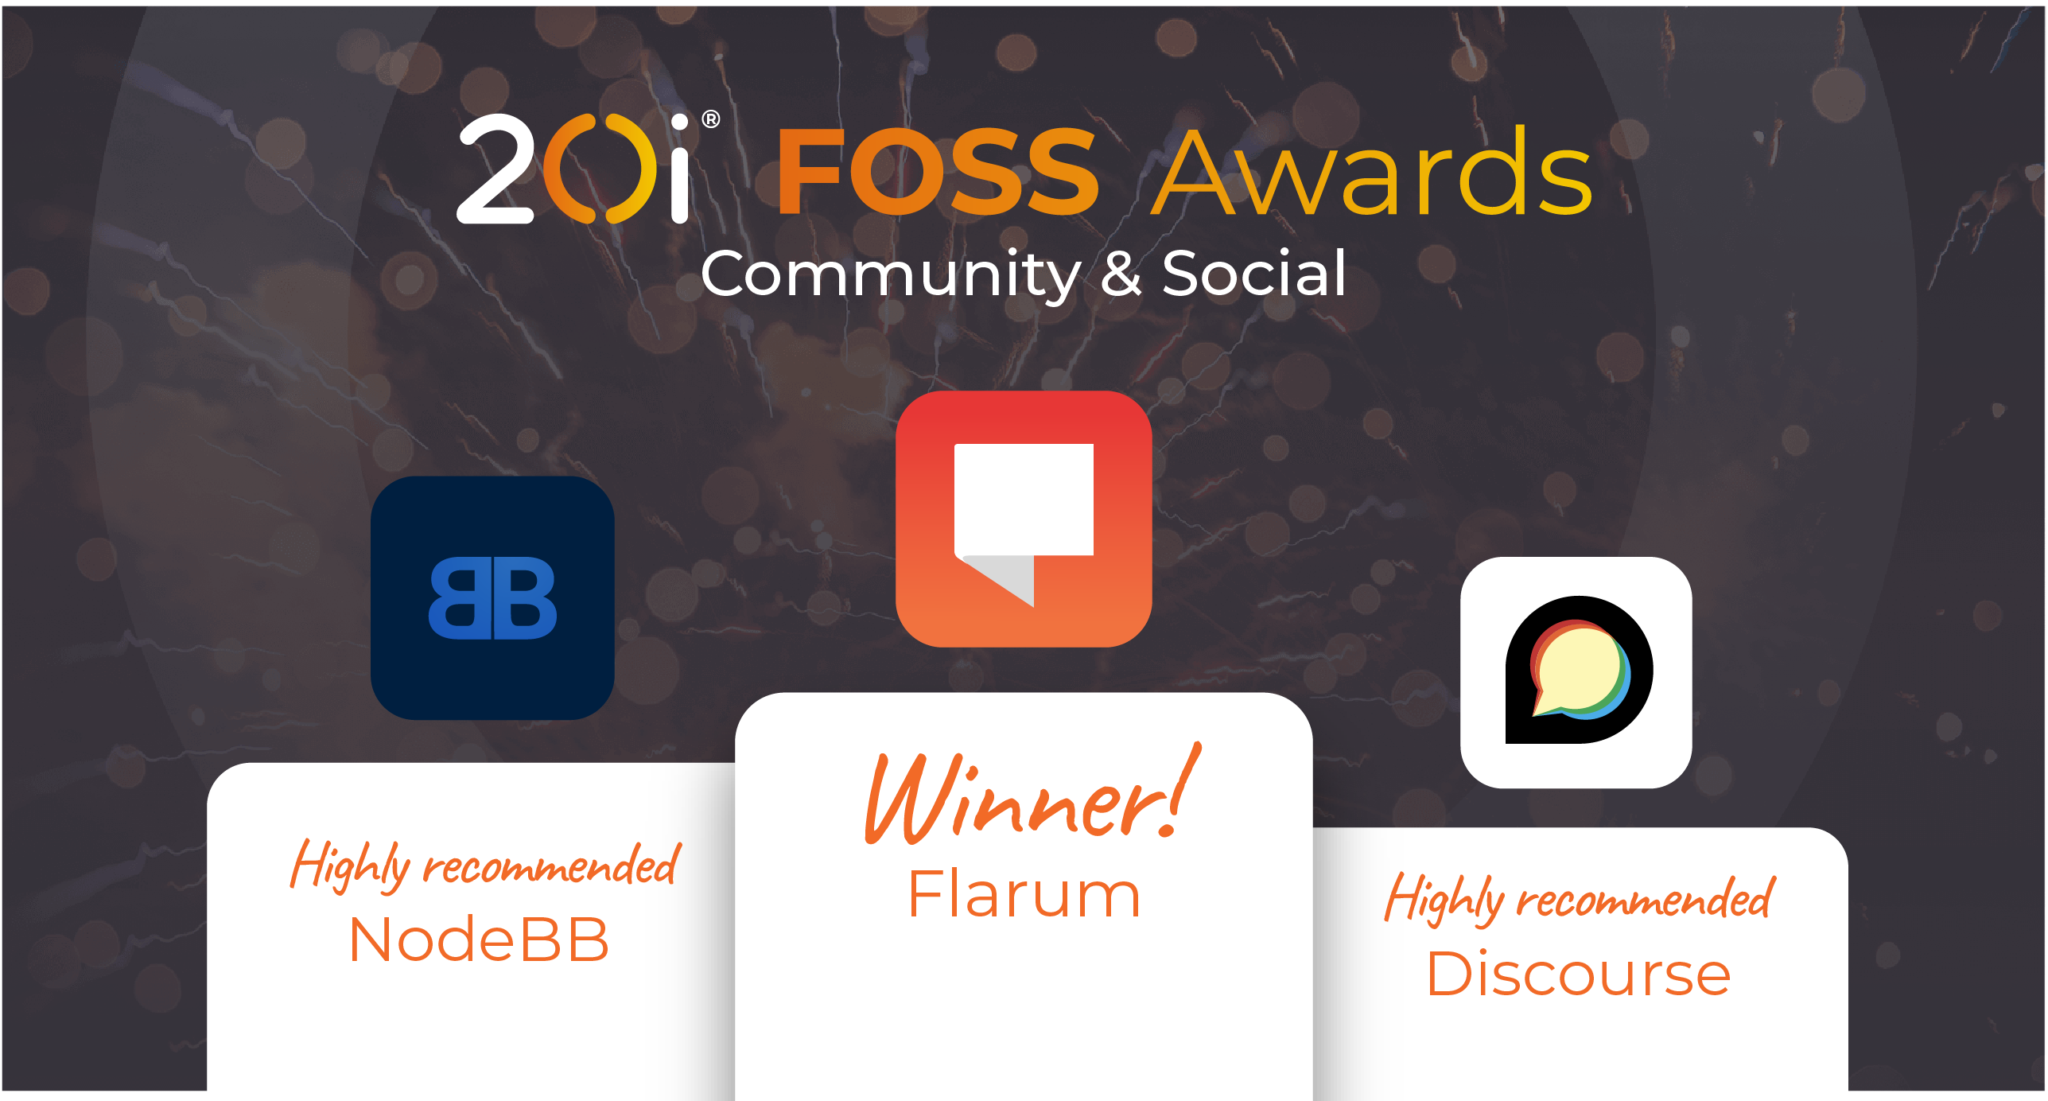 20i foss awards winners 2023 - community & social category